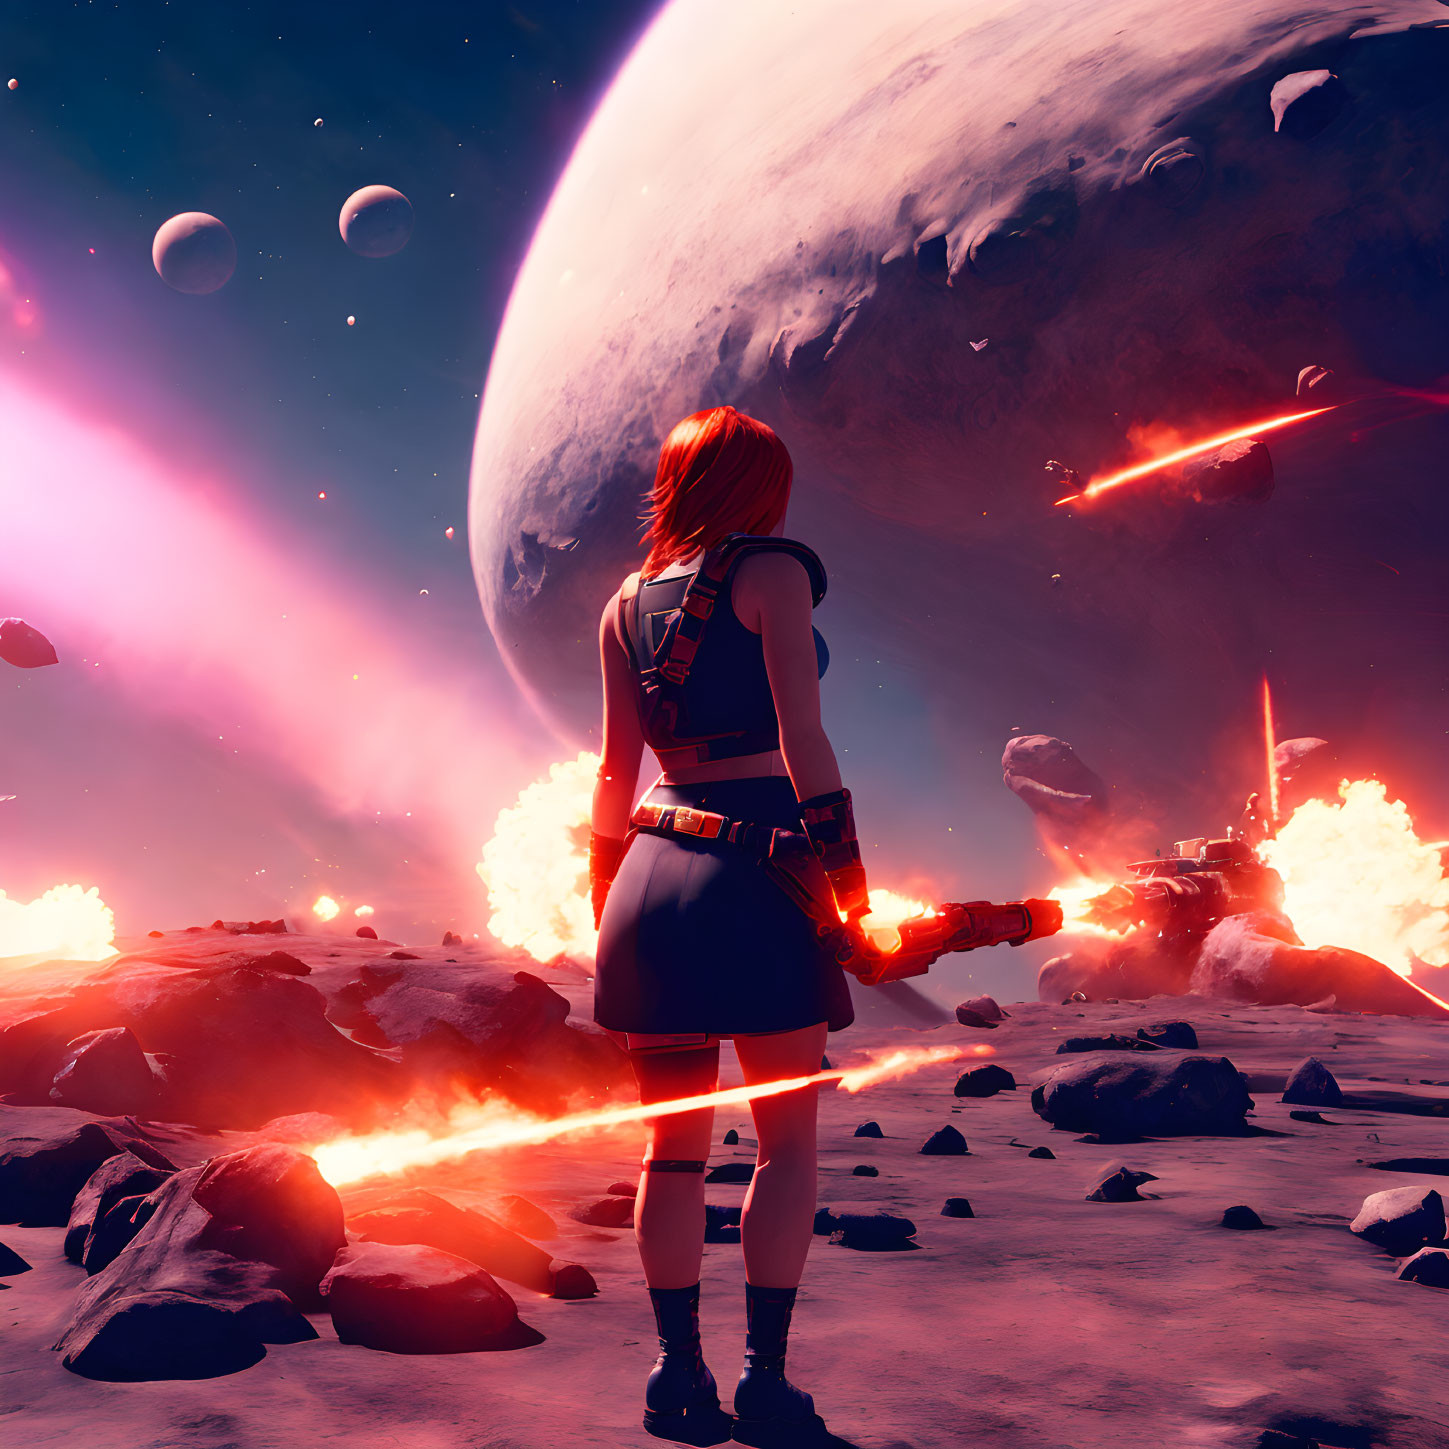 Female warrior observing cosmic battle on alien landscape with exploding ships